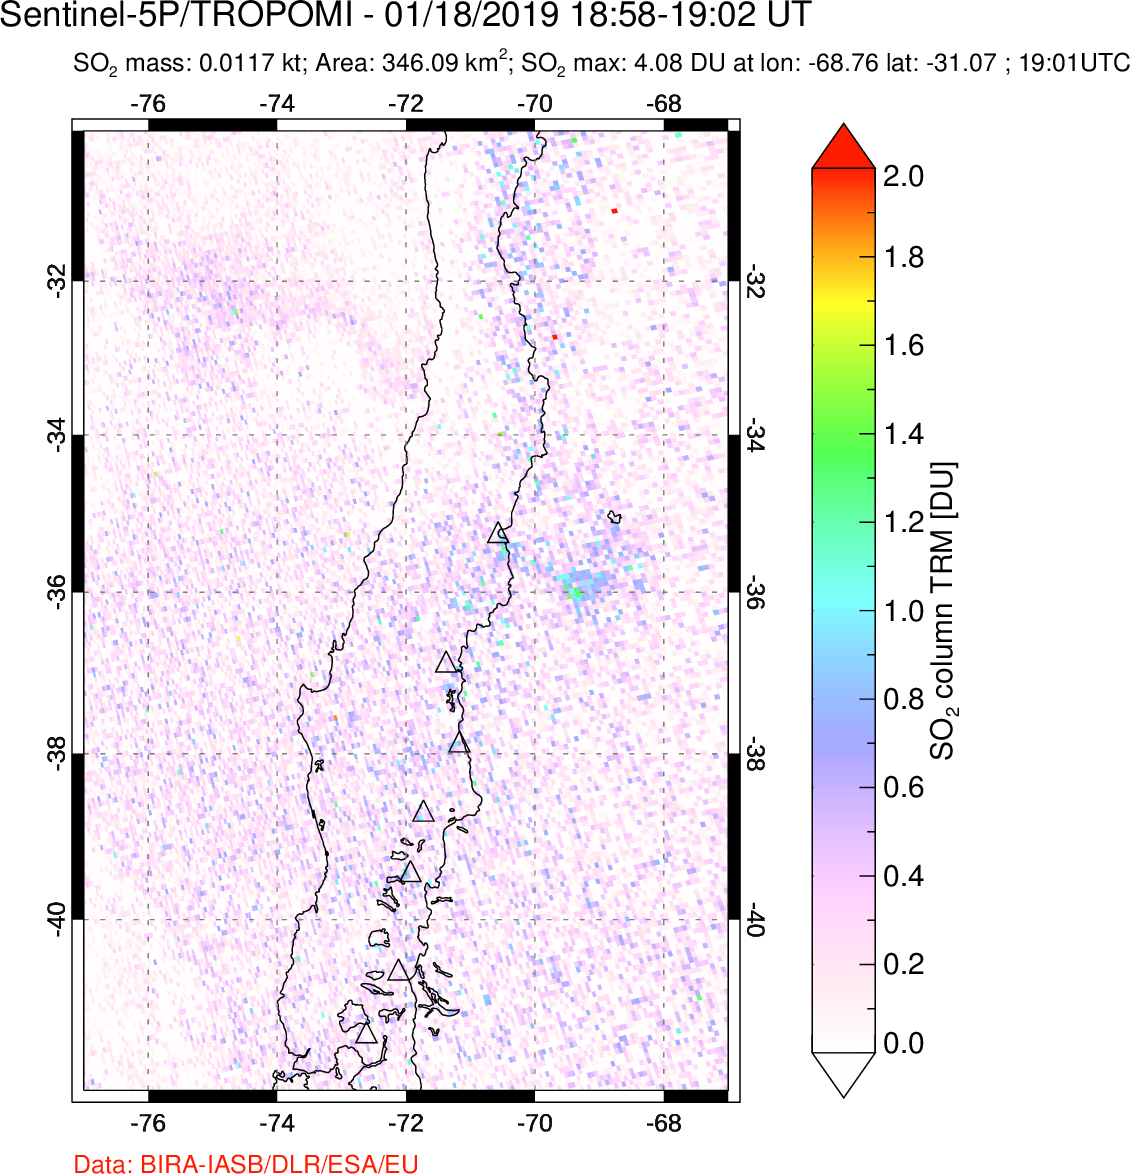 A sulfur dioxide image over Central Chile on Jan 18, 2019.